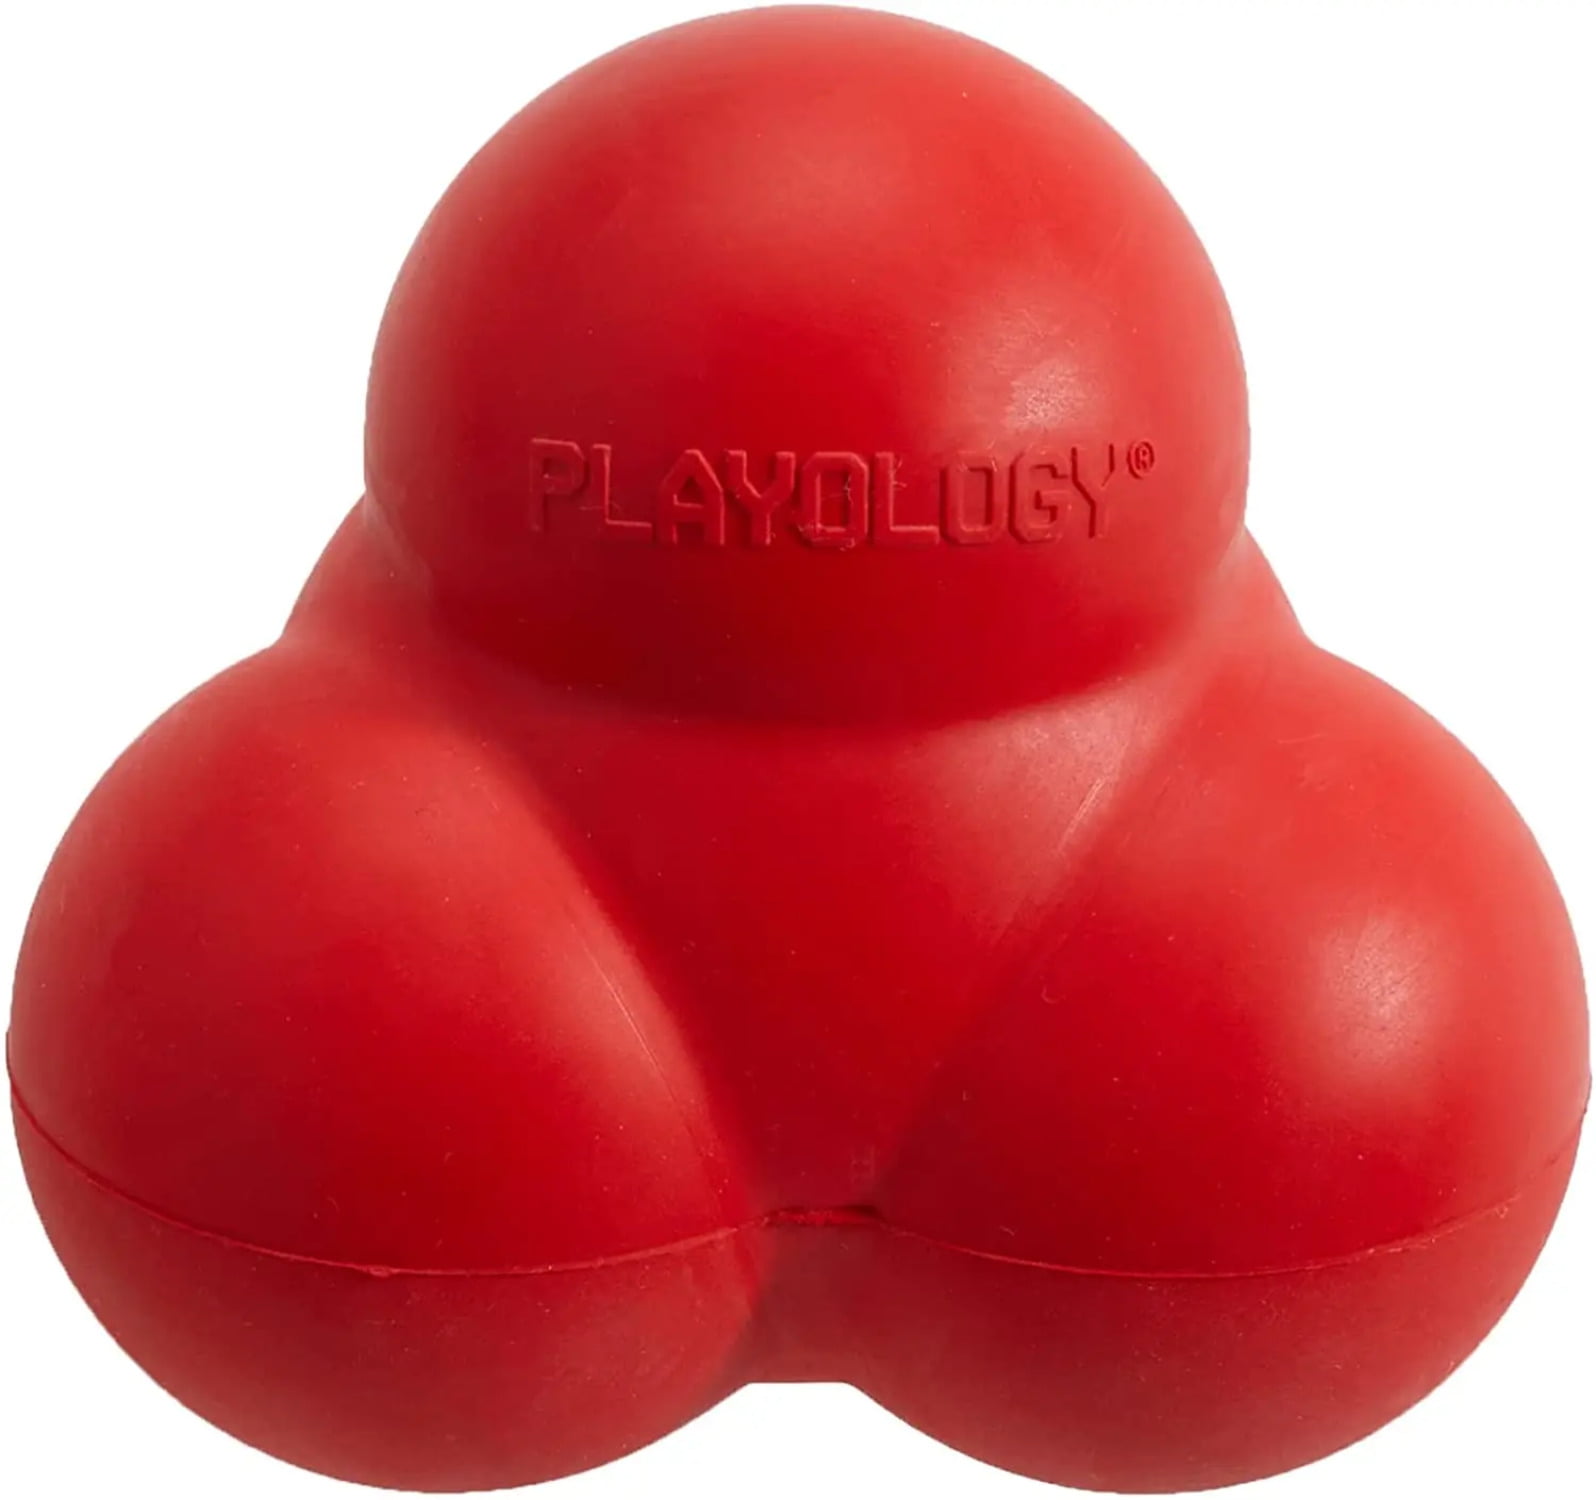 Playology Puppy Sensory Ball Beef Dog Toy, X-Small